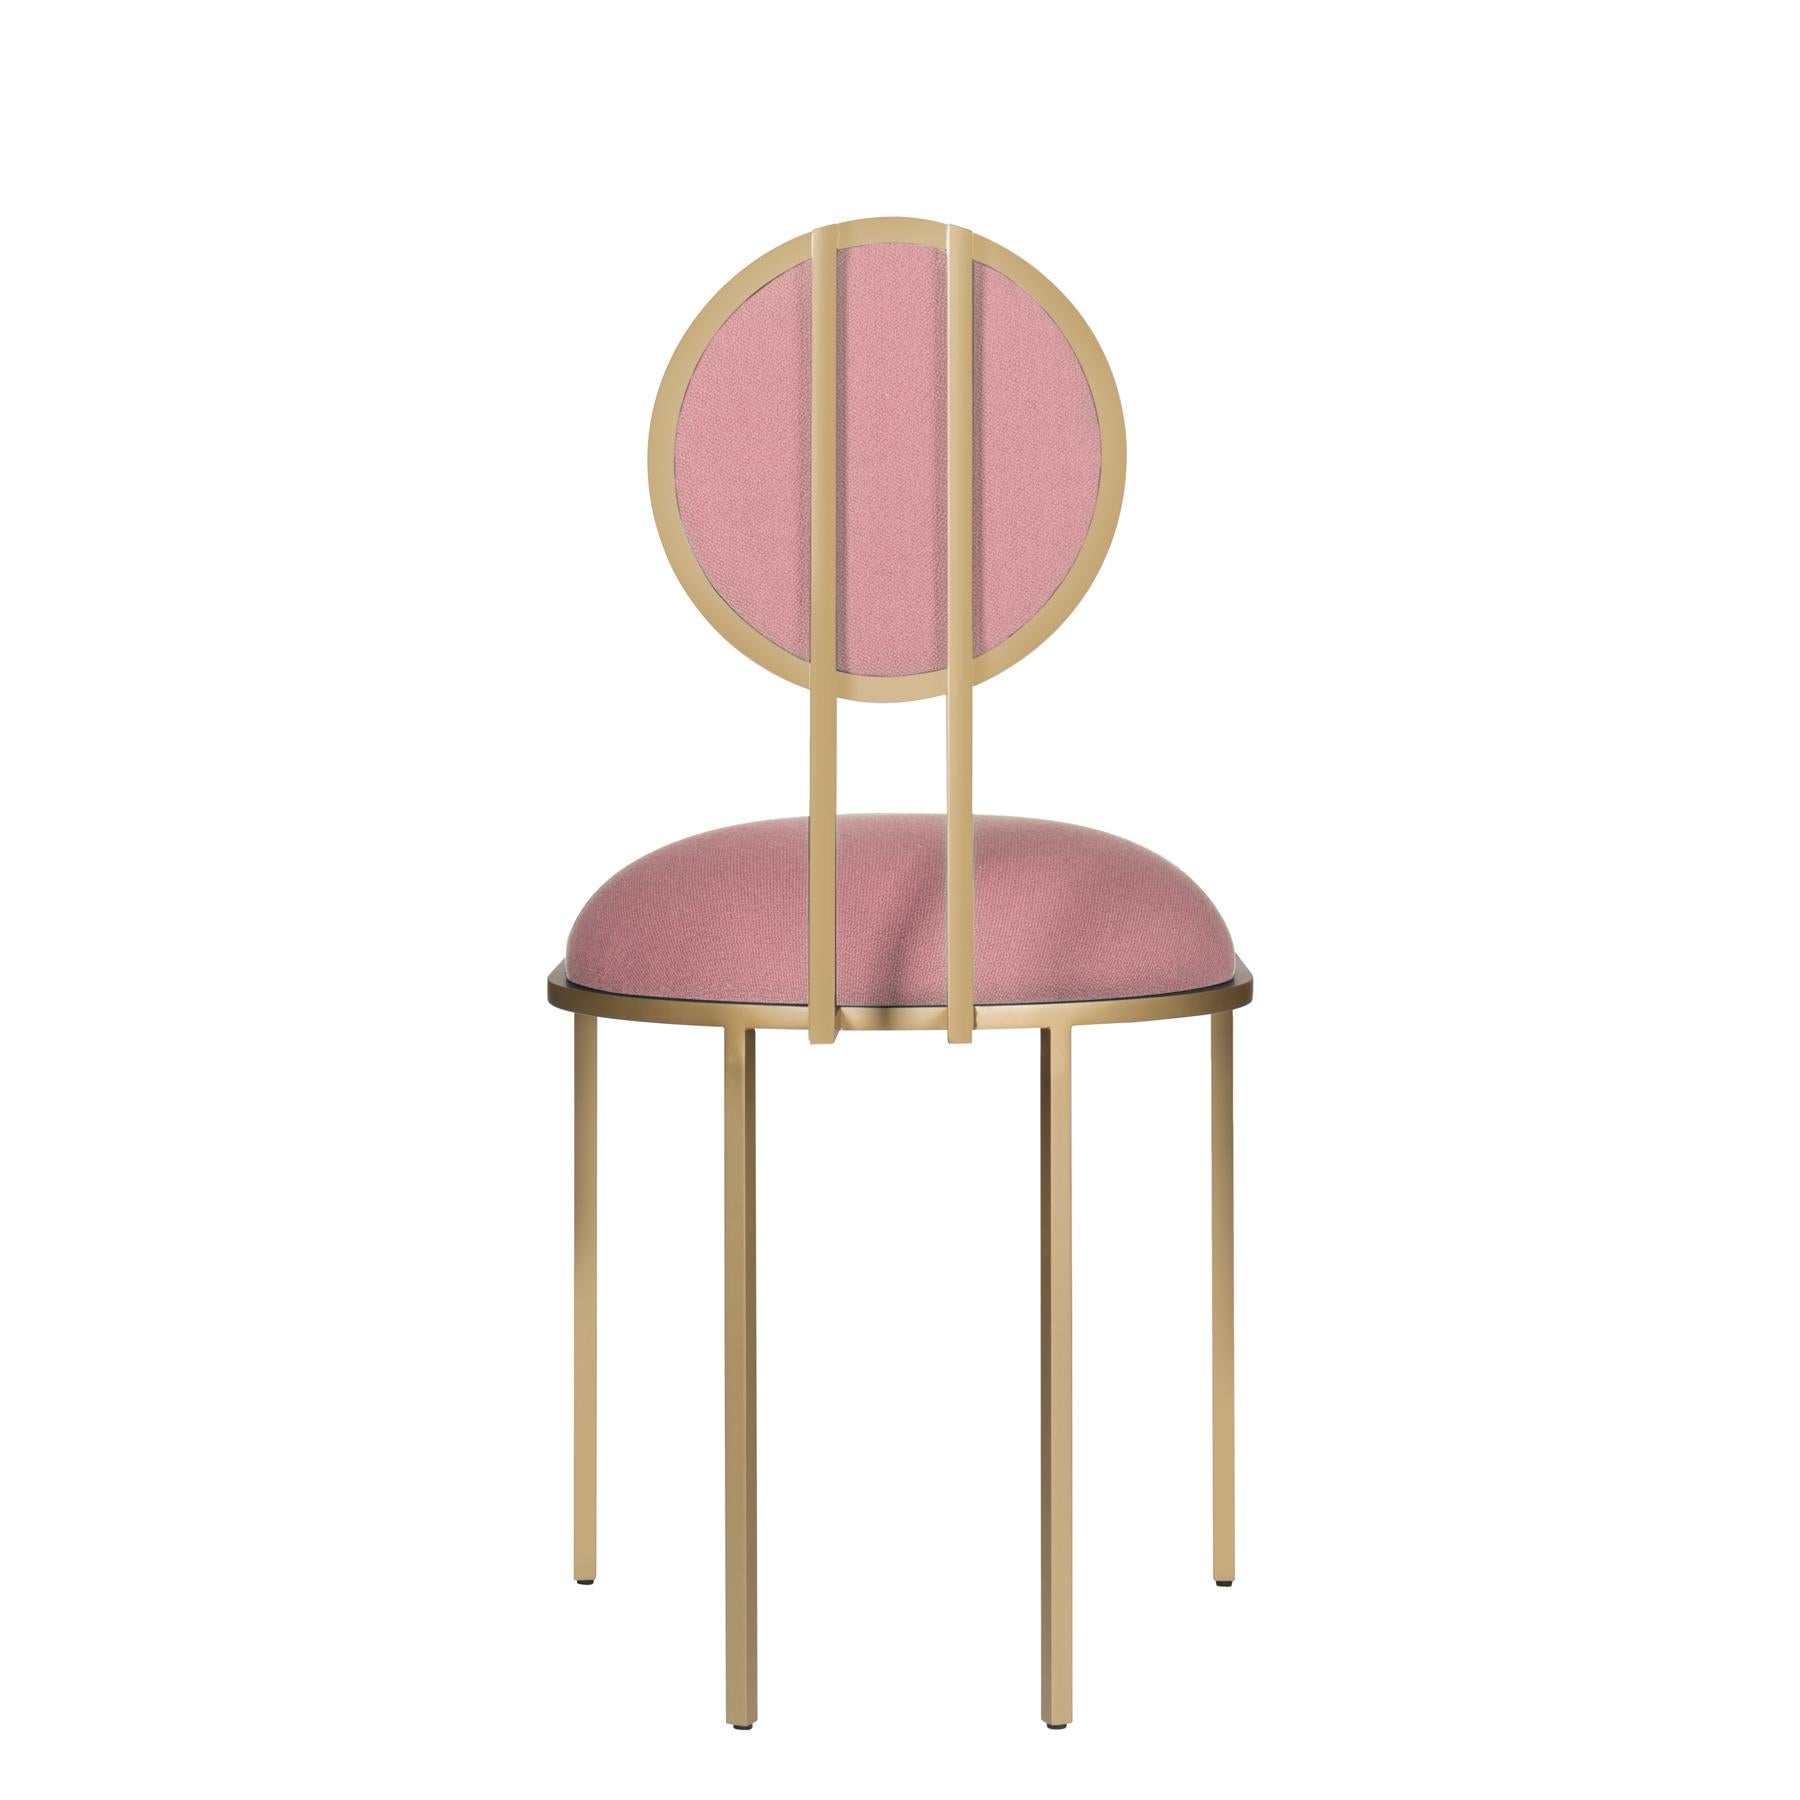 British Orbit Dining Chair in Pink Wool Fabric, Brushed Brass, by Lara Bohinc